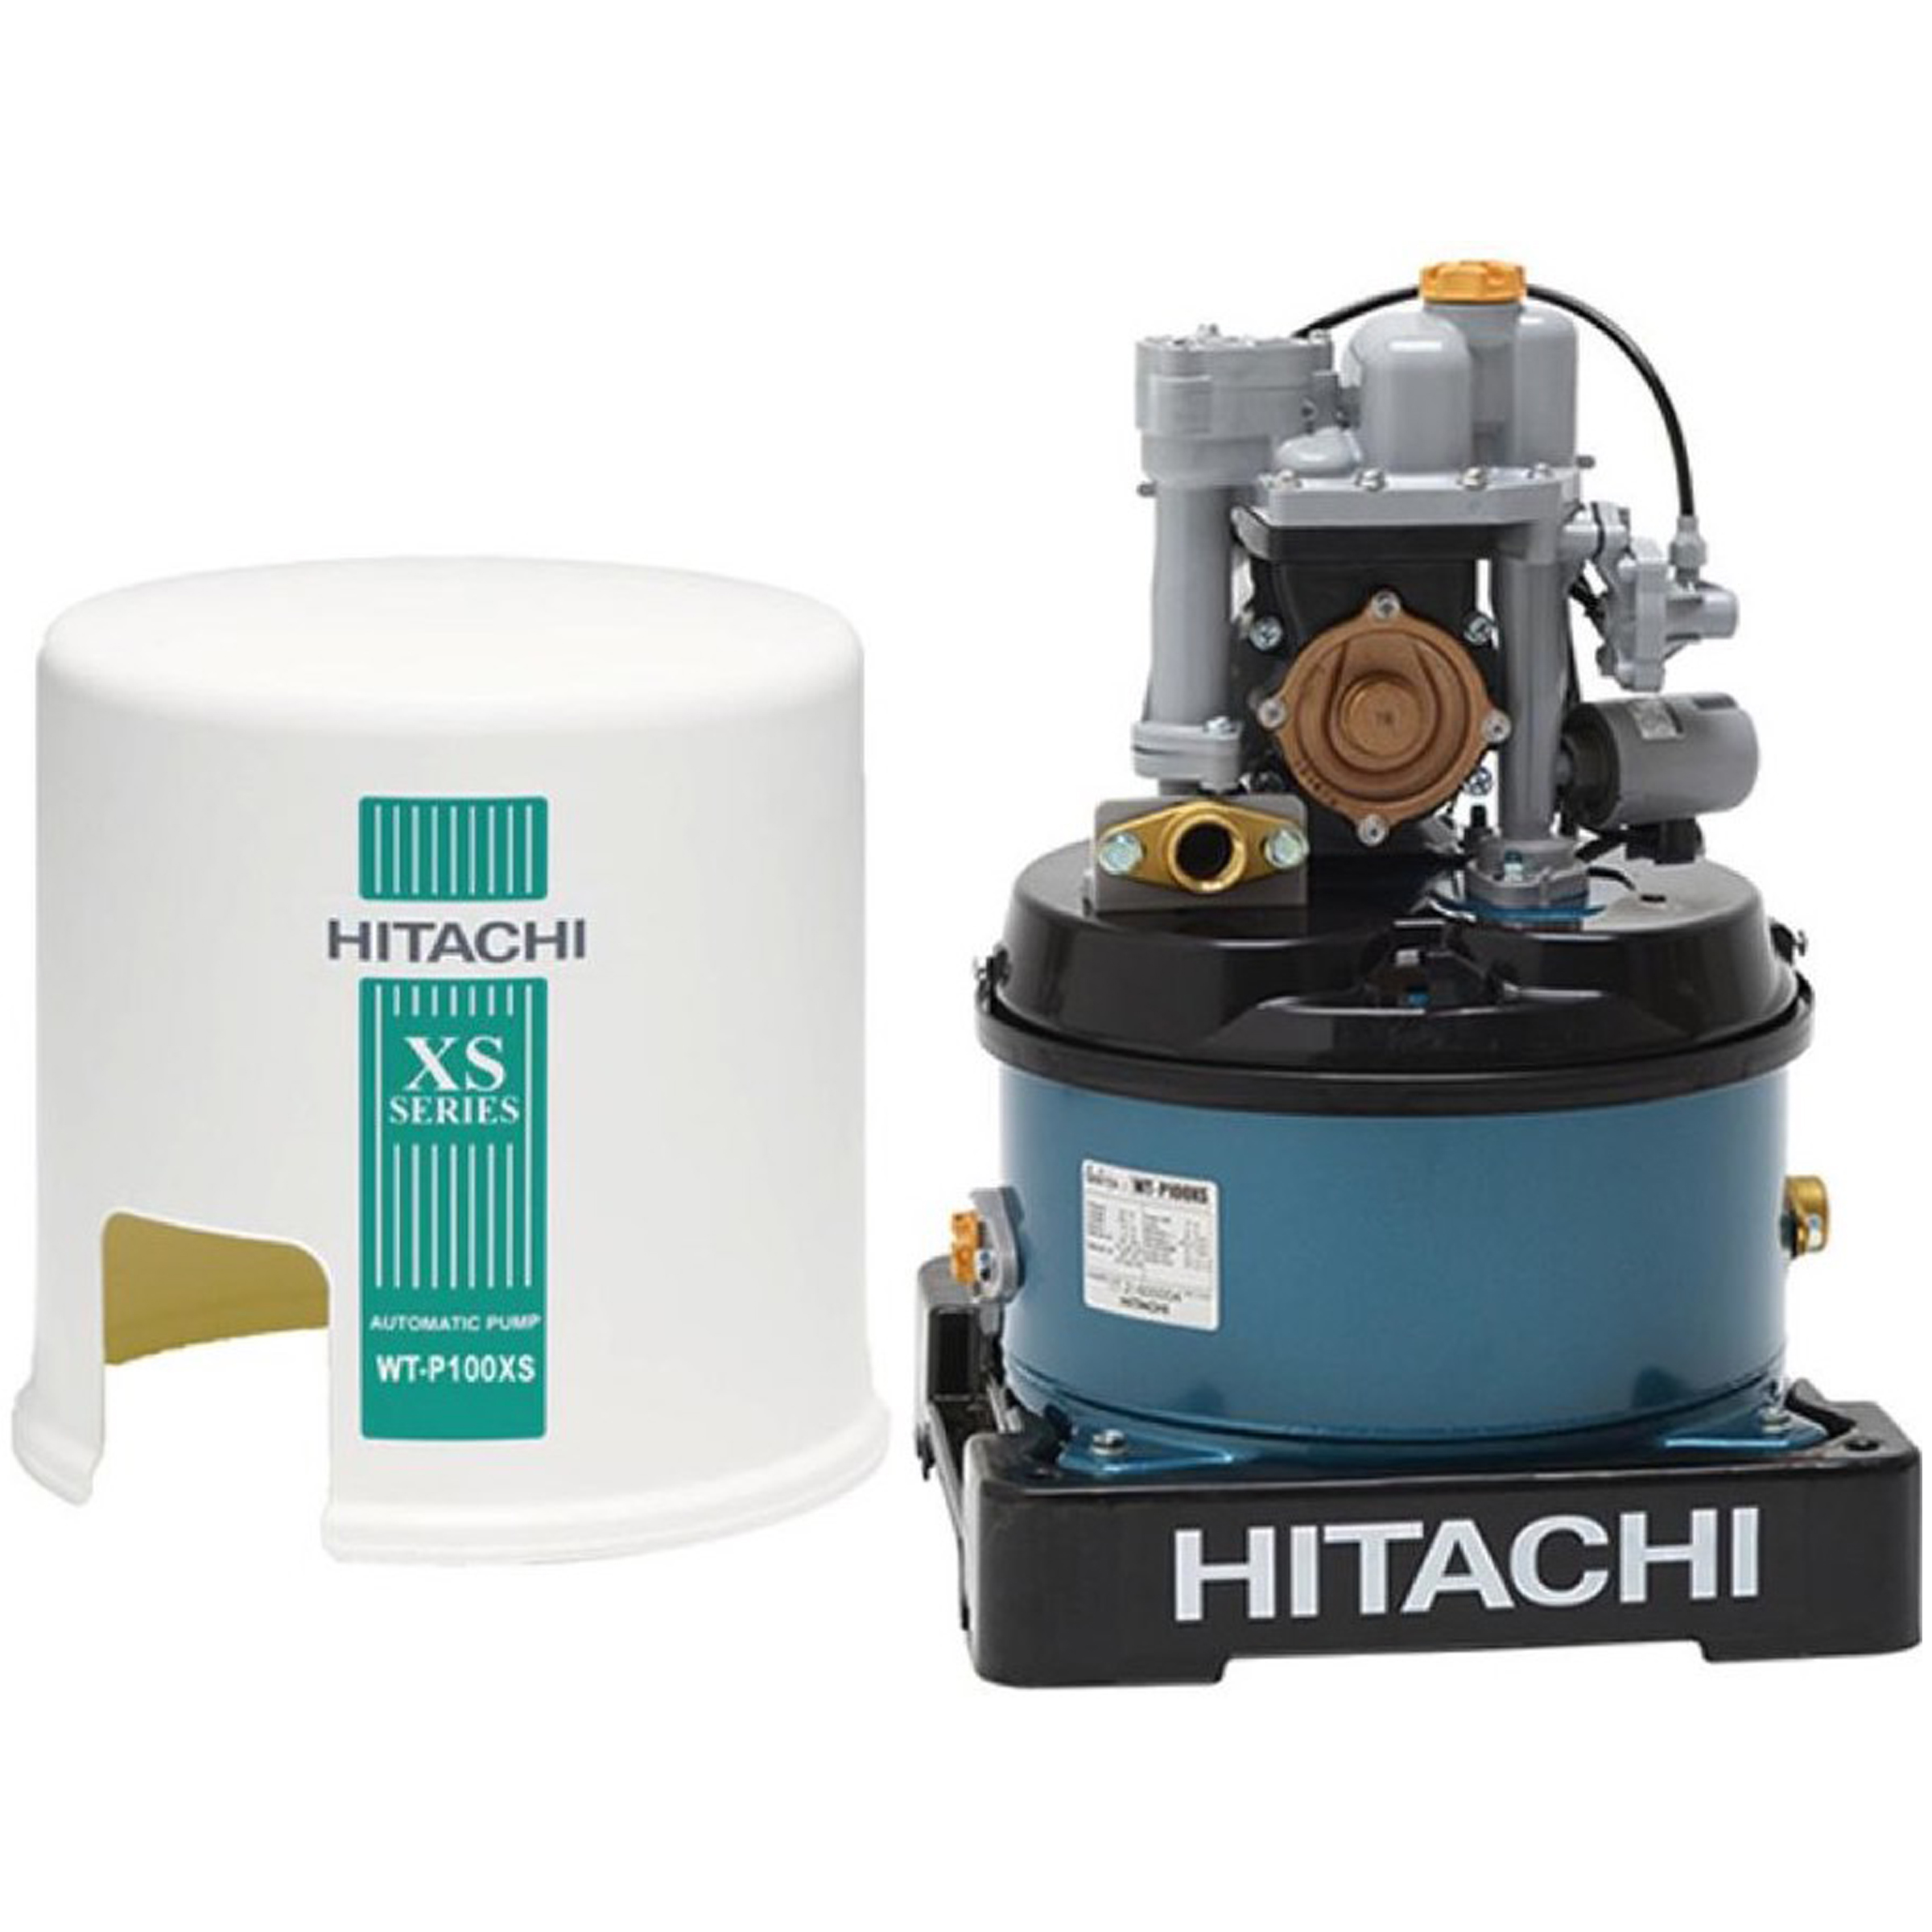 HITACHI Automatic Pump 100W, 30L/min, WT-P100XS - Click Image to Close